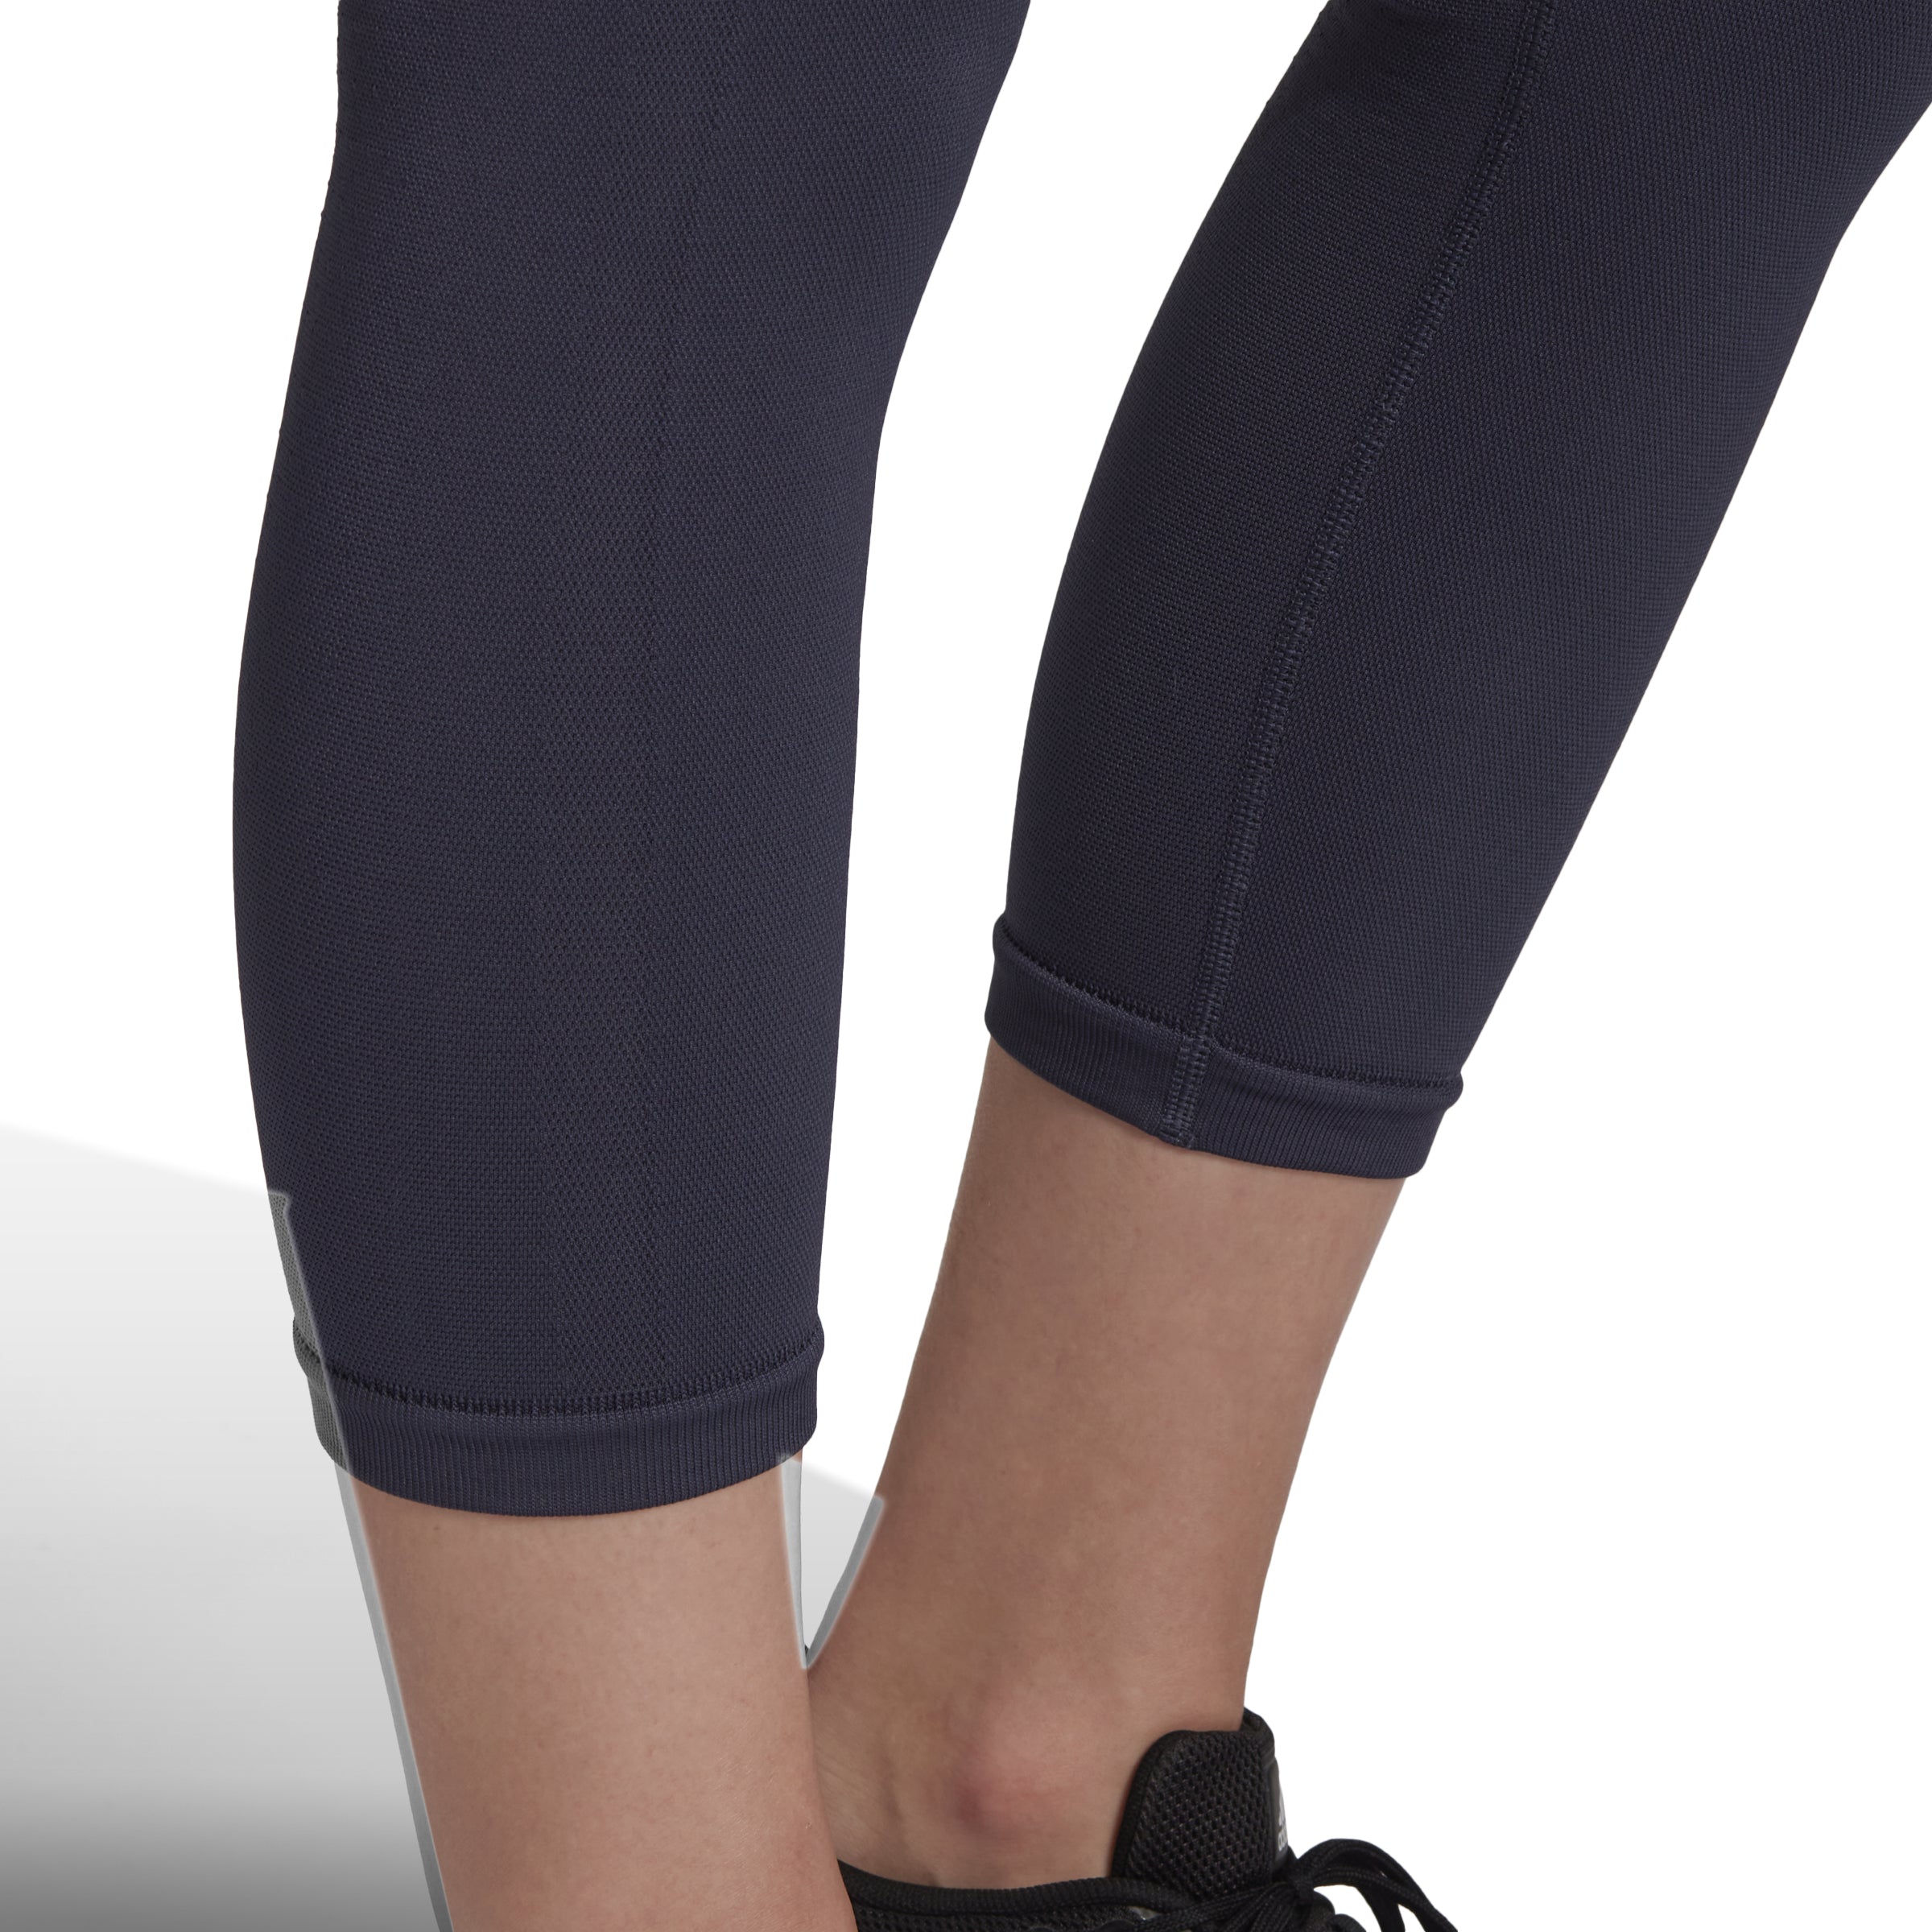 adidas Training Aeroknit seamless leggings in grey